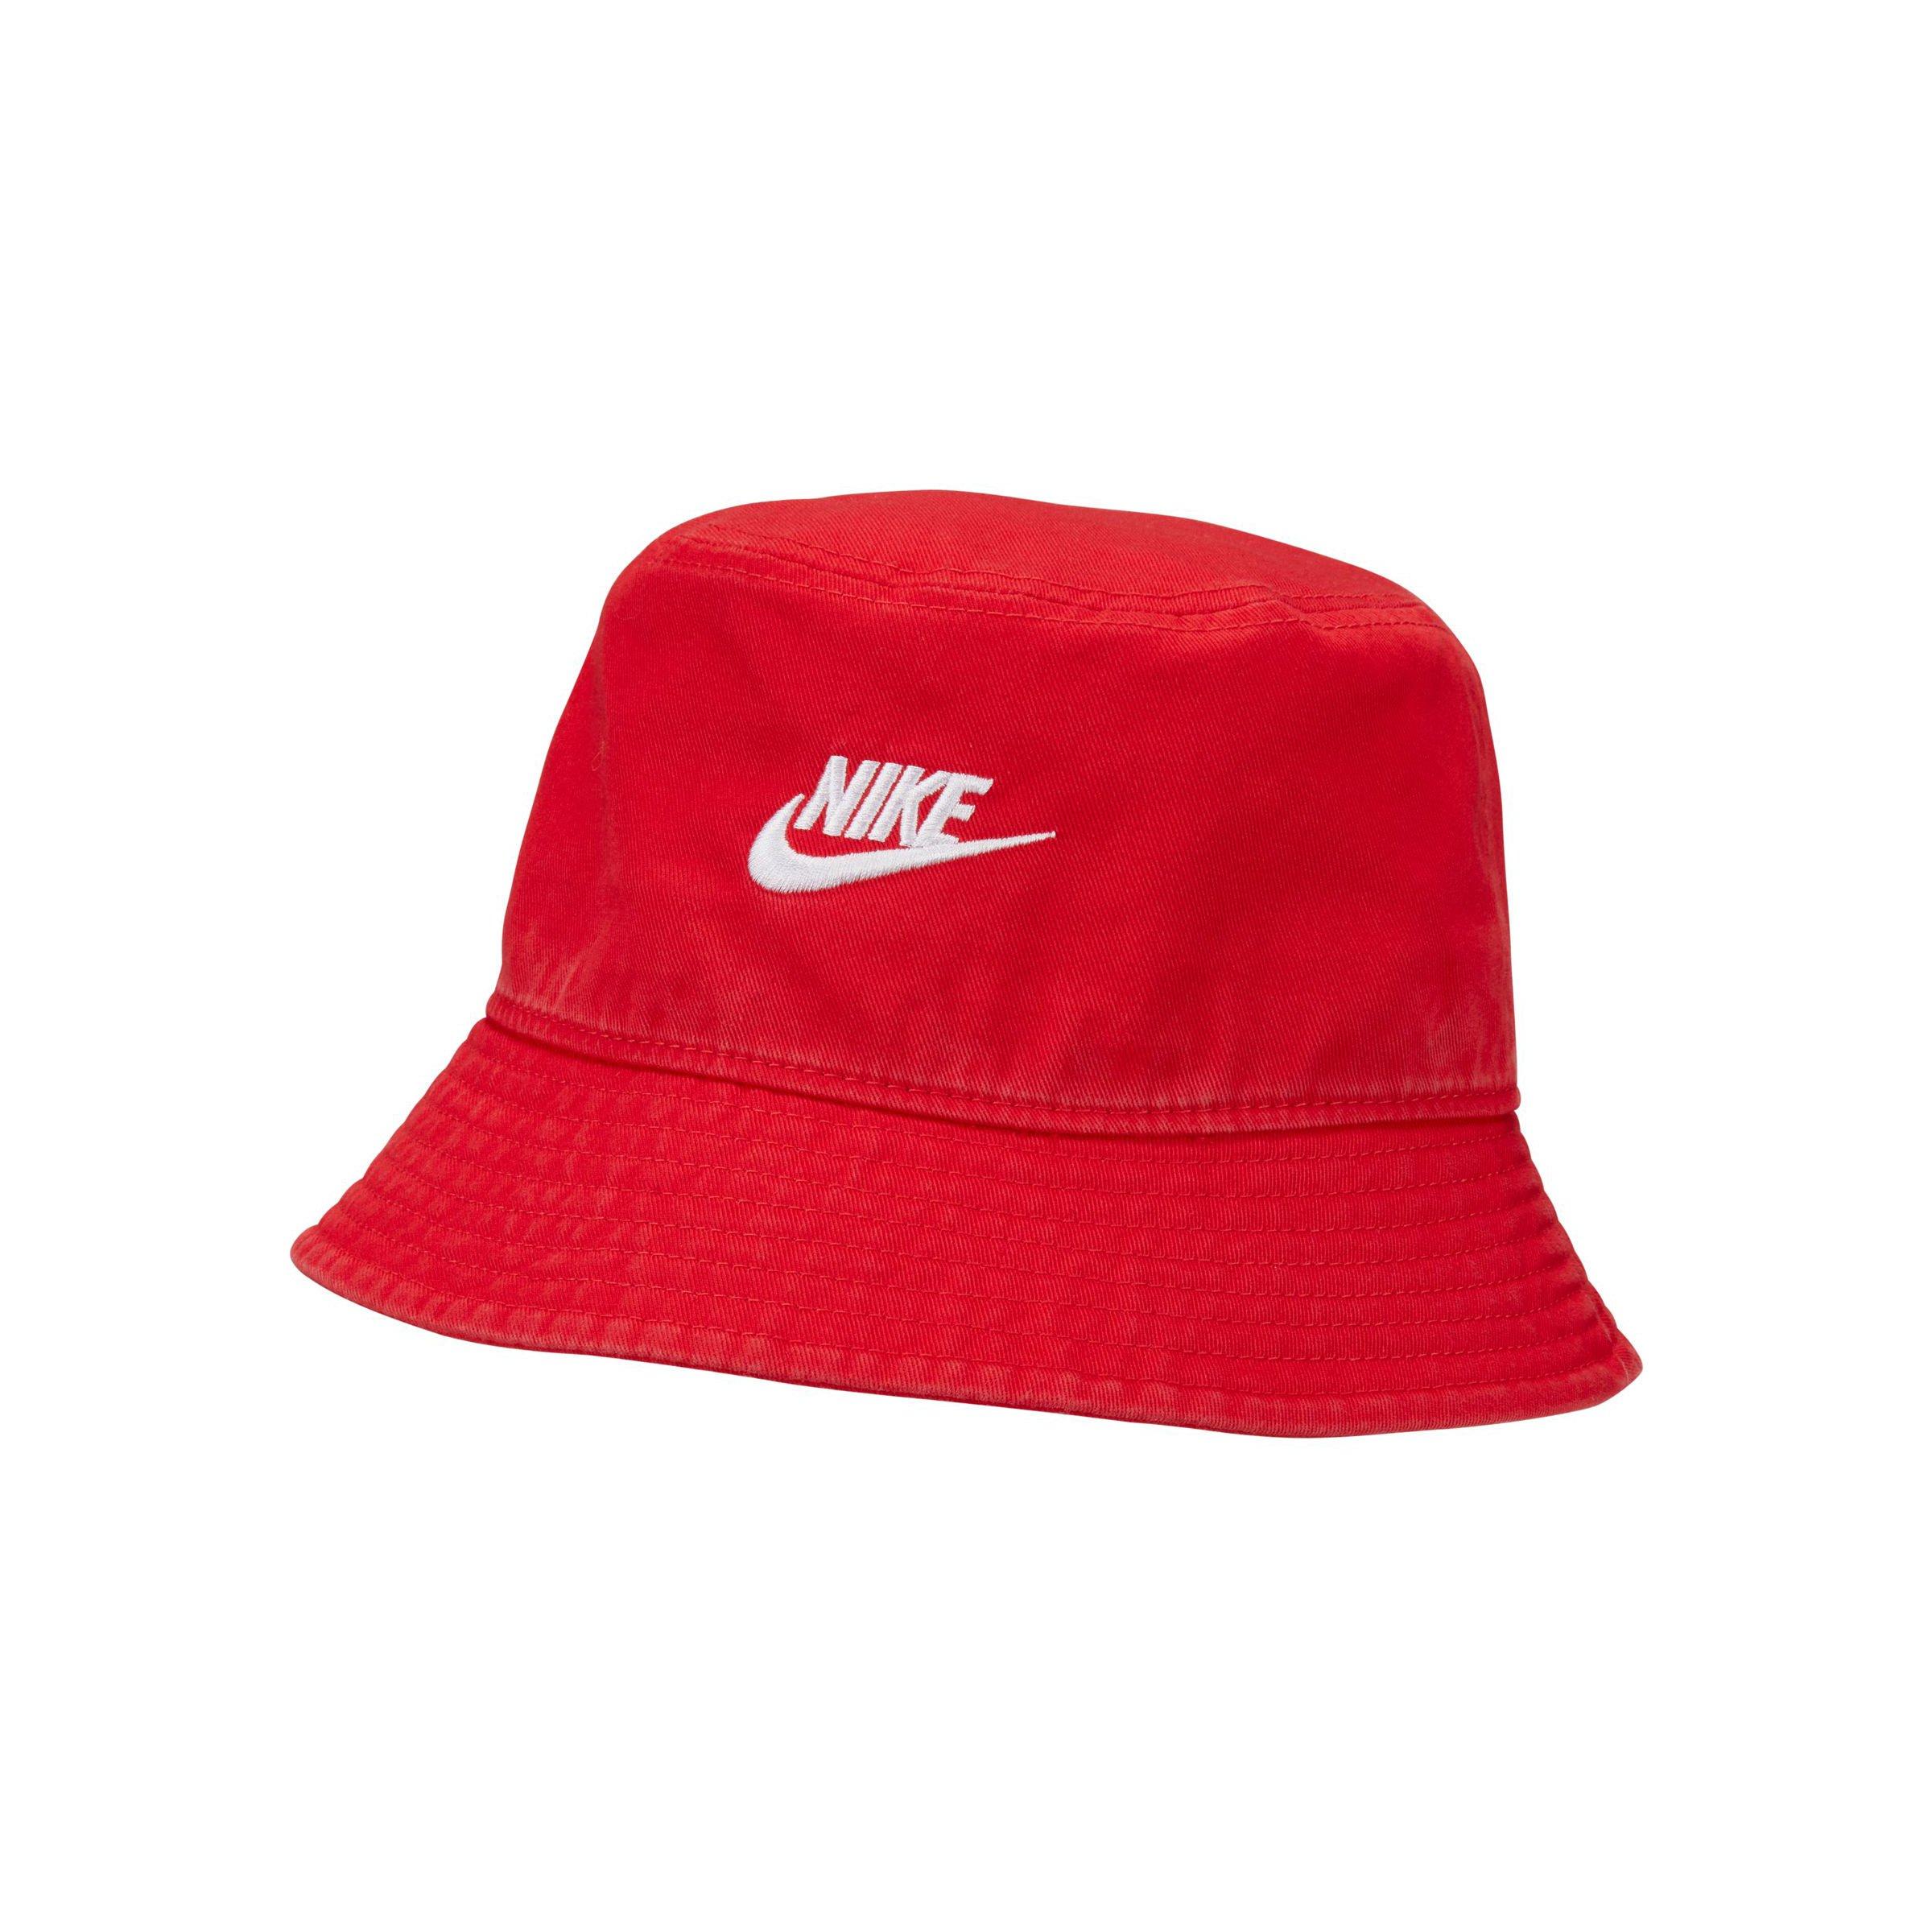 Red New Adult Unisex Reebok Hat